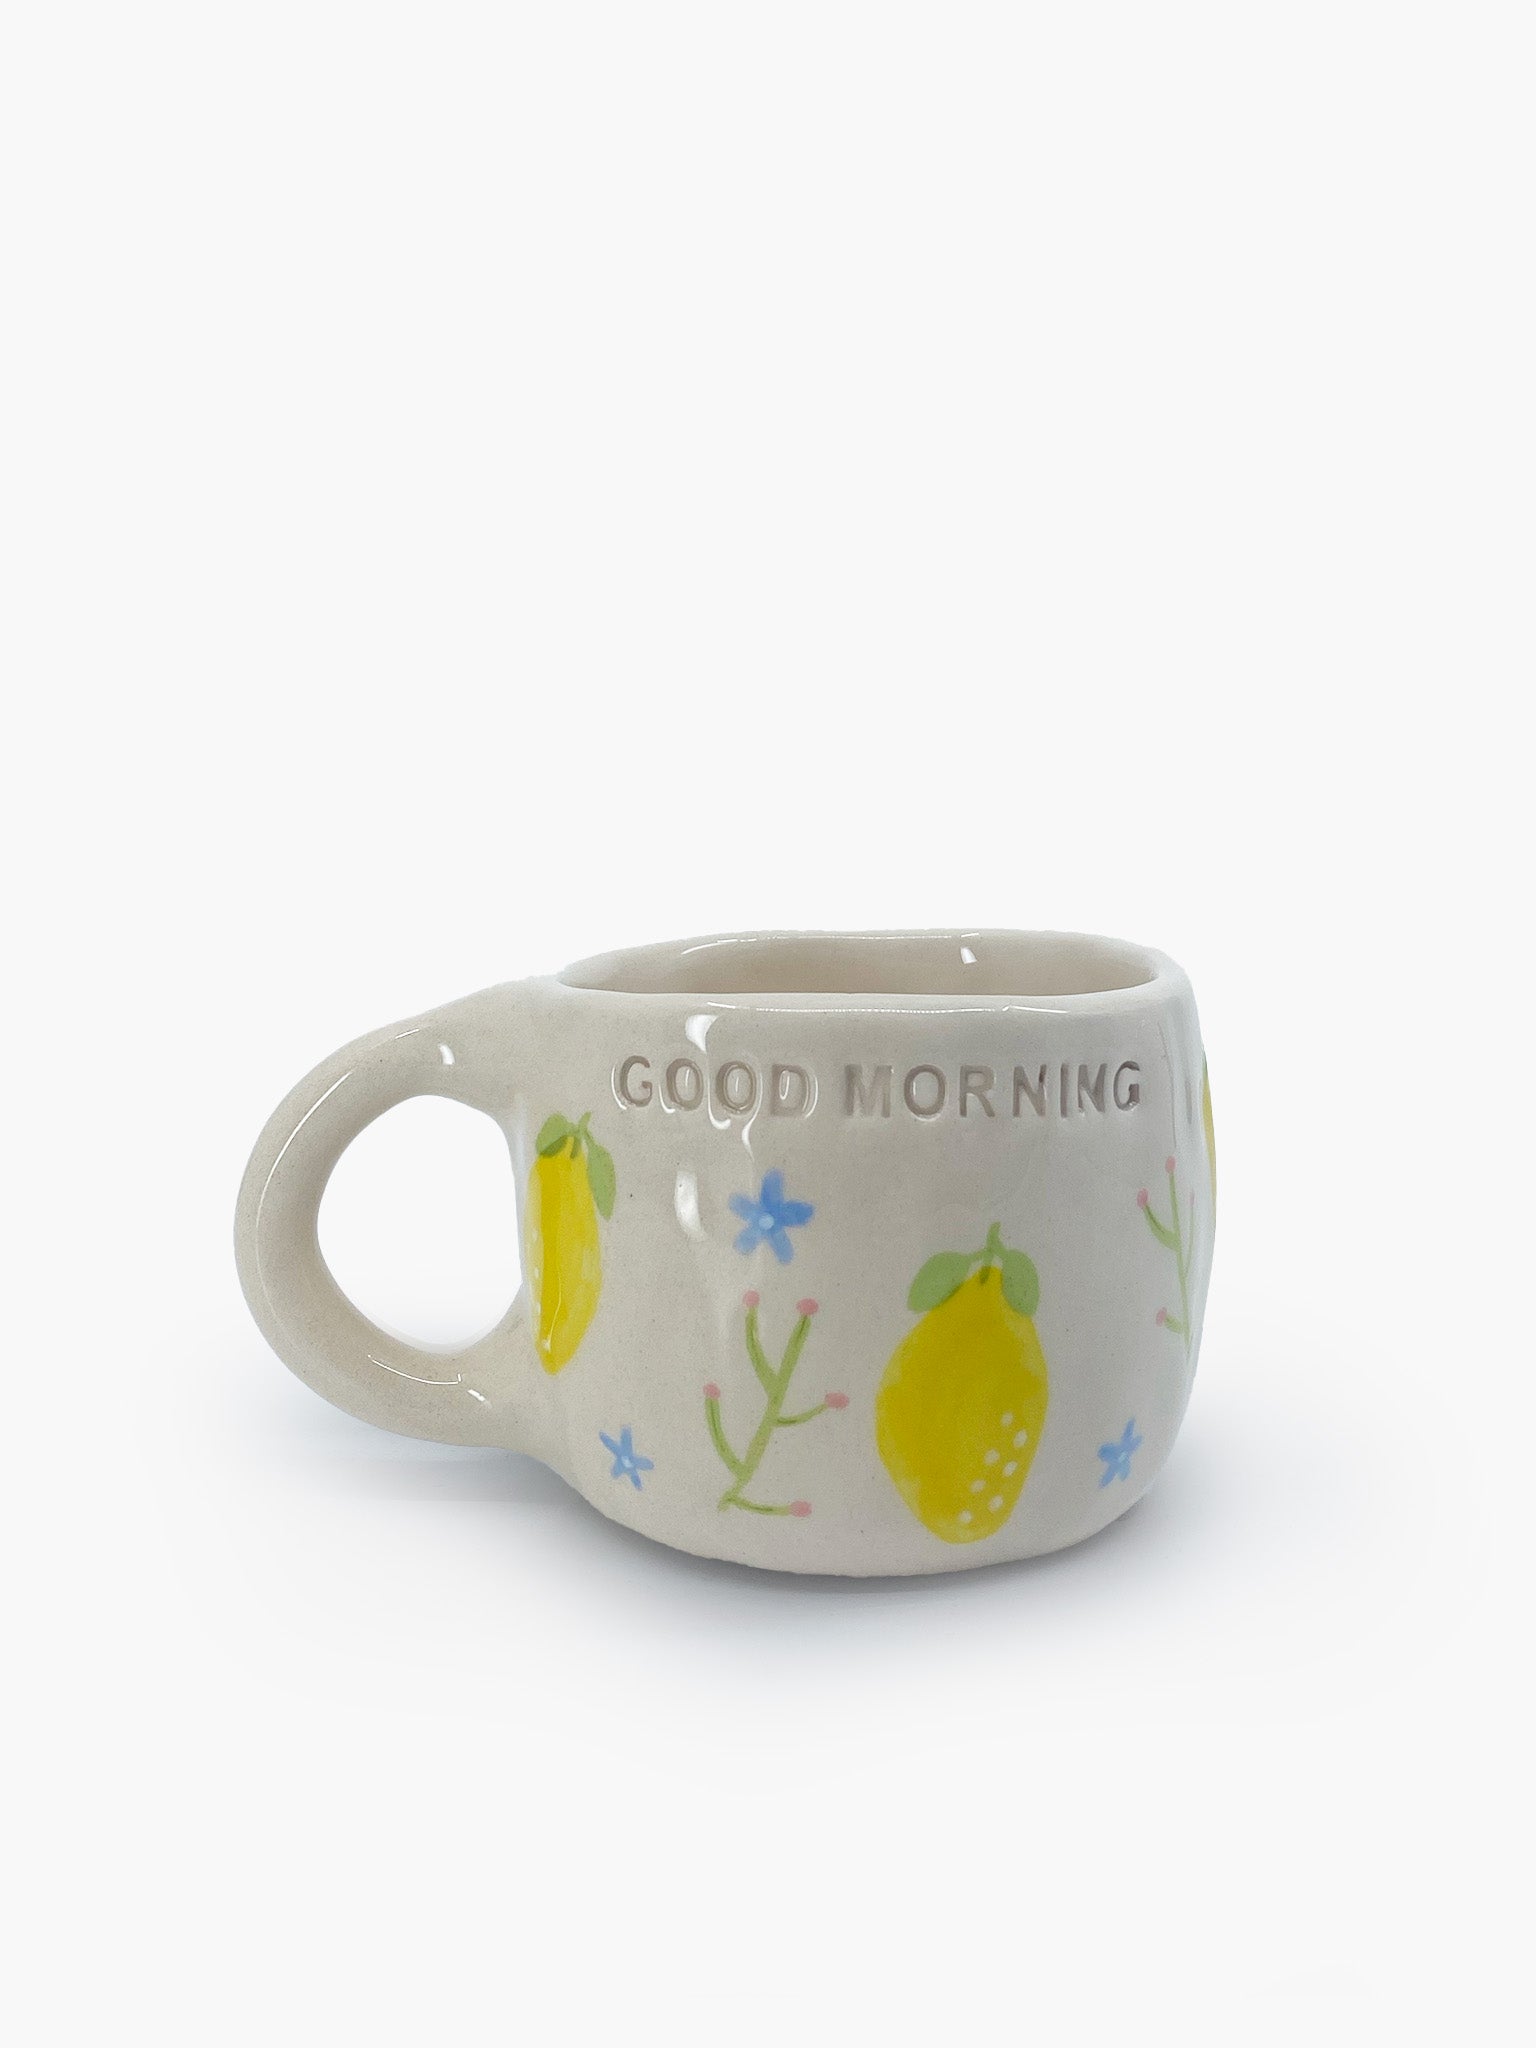 Lemon Morning Mug